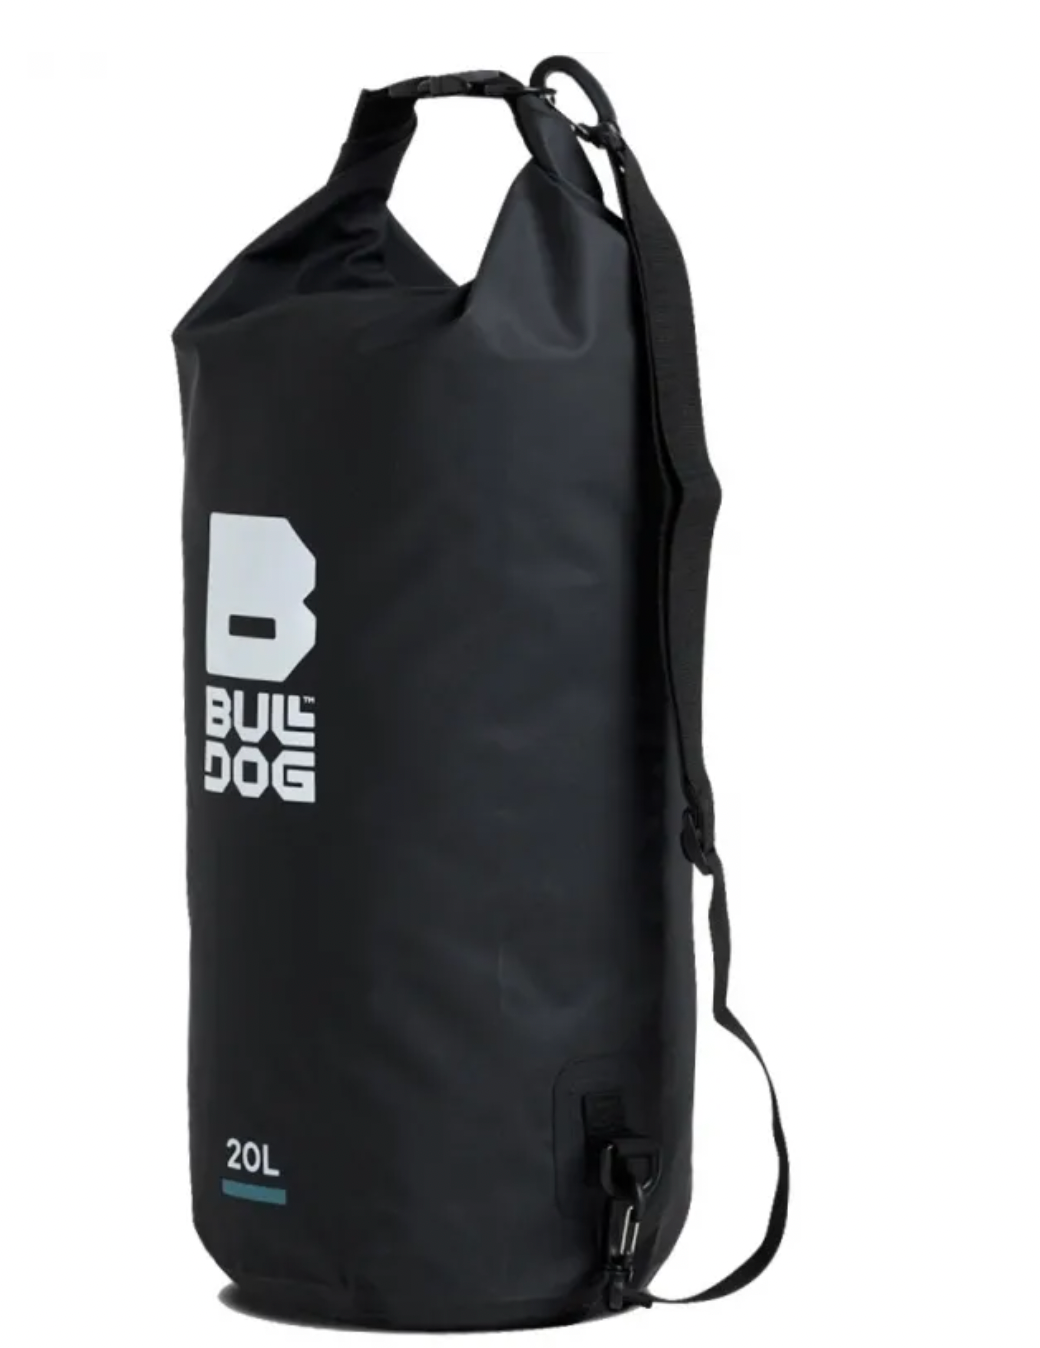 Bulldog Wetsuit Dry Bag 20 Litre